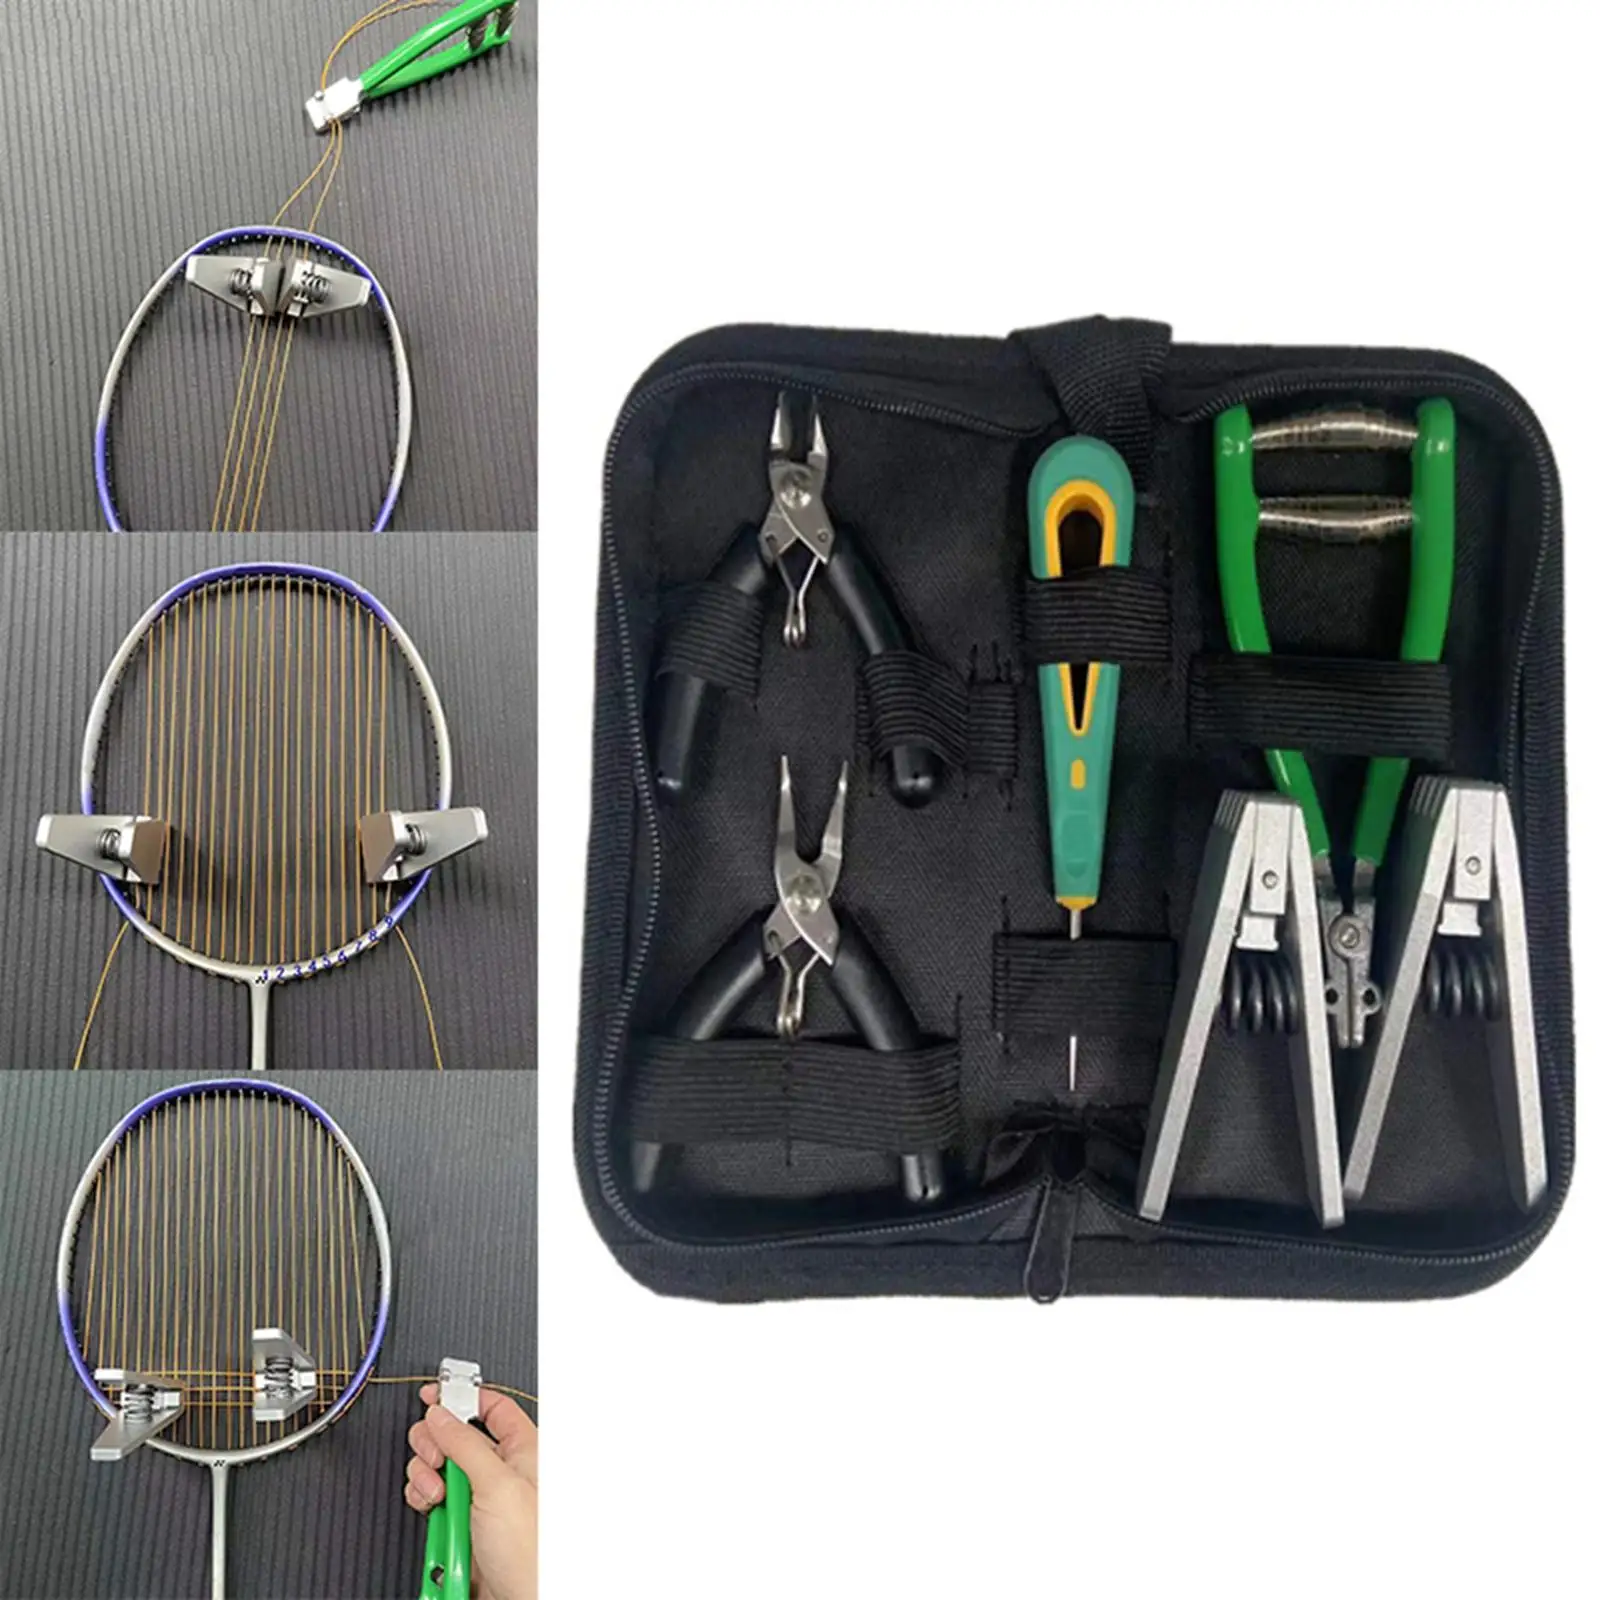 Starting Stringing Clamp Tool Kit Badminton Tennis Racket Nippers Gripper